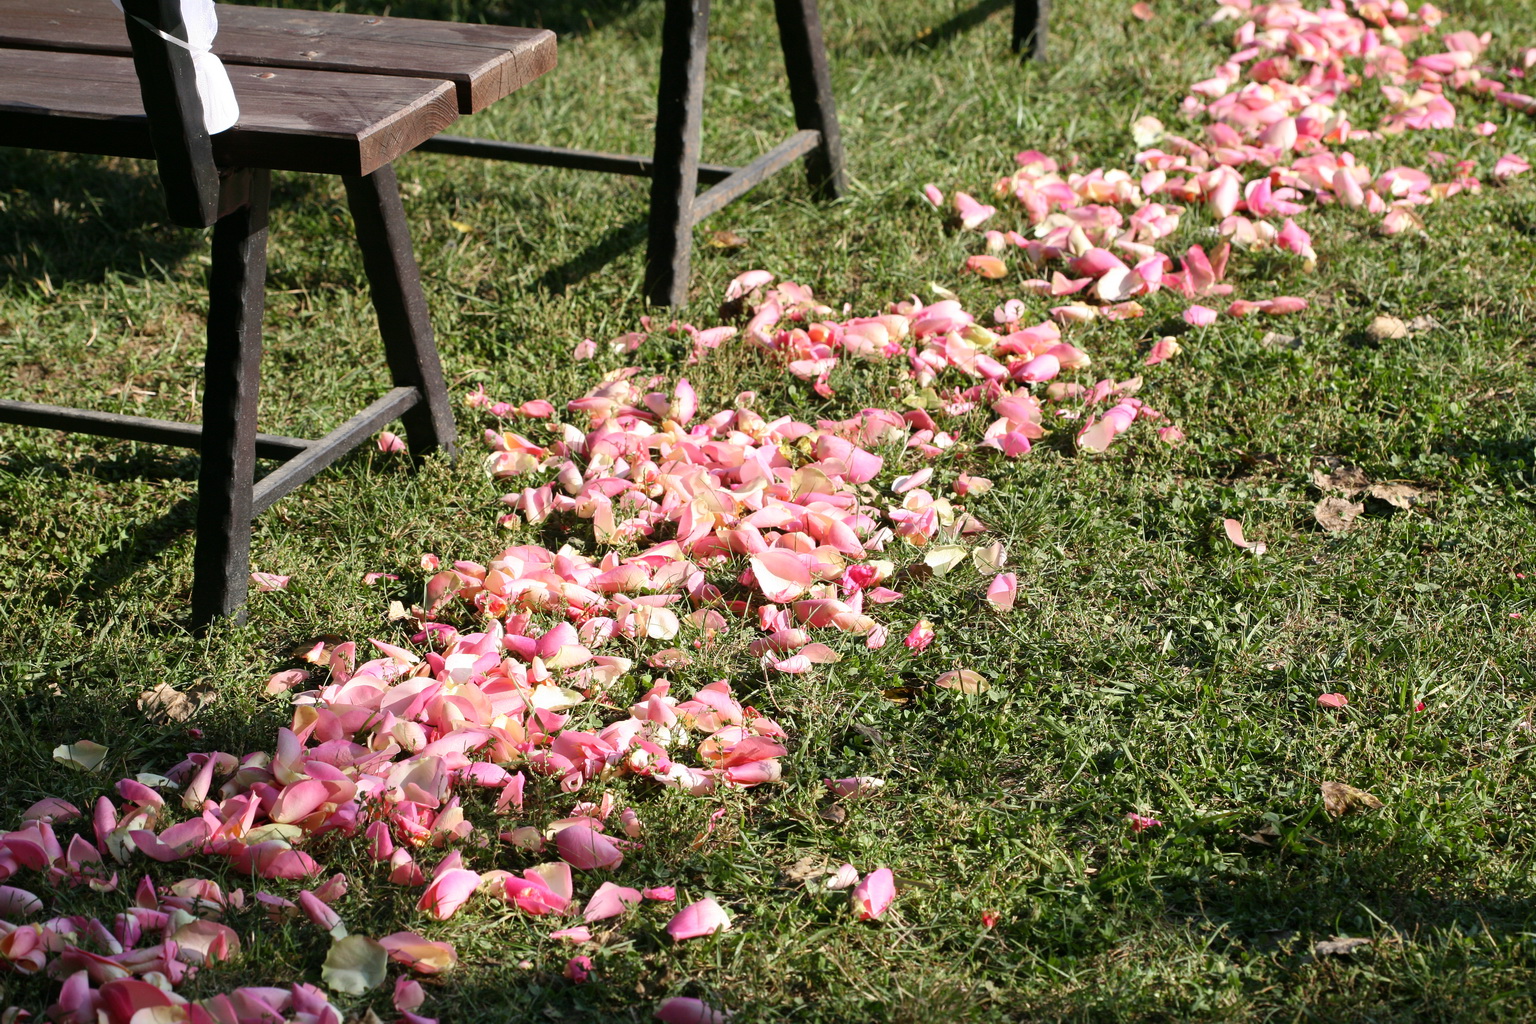 flower delivery Budapest - pink petals (3 m) Bélapátfalva, wedding